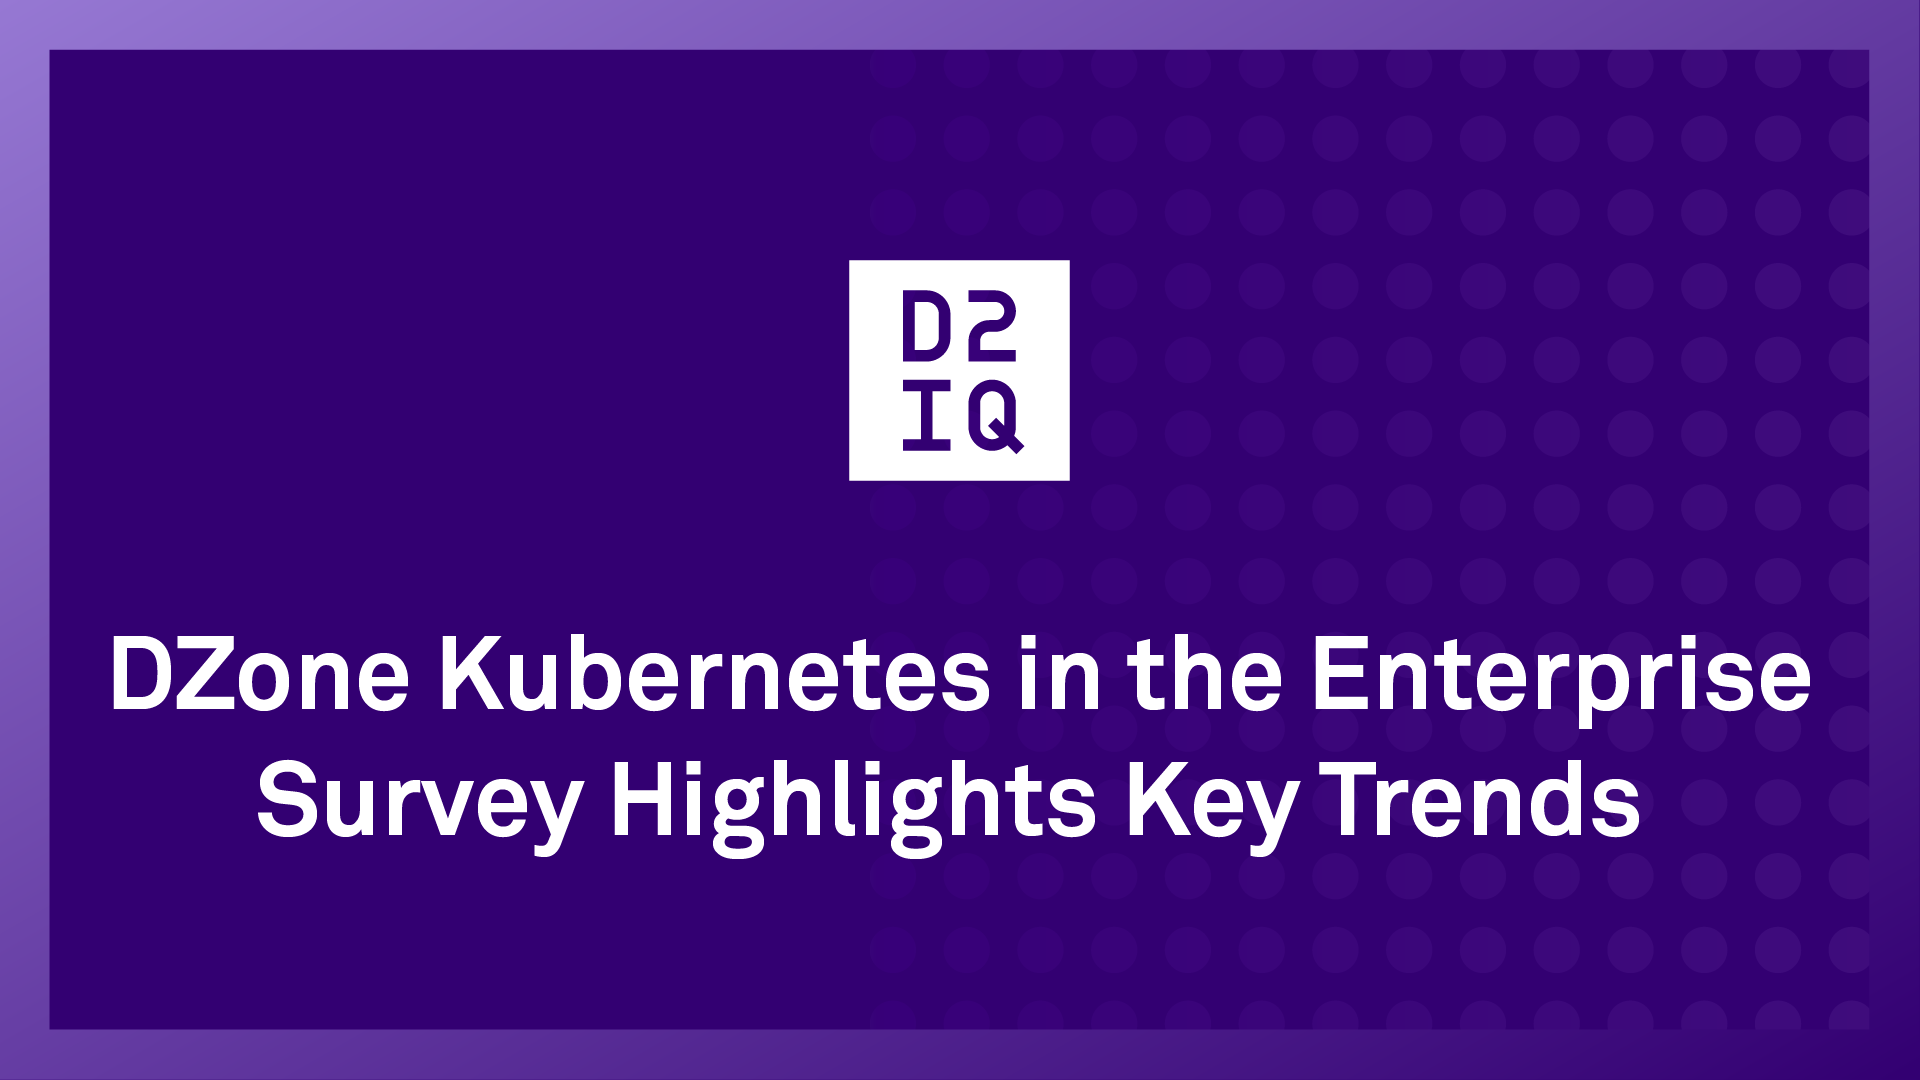 DZone Kubernetes in the Enterprise Survey Highlights Key Trends